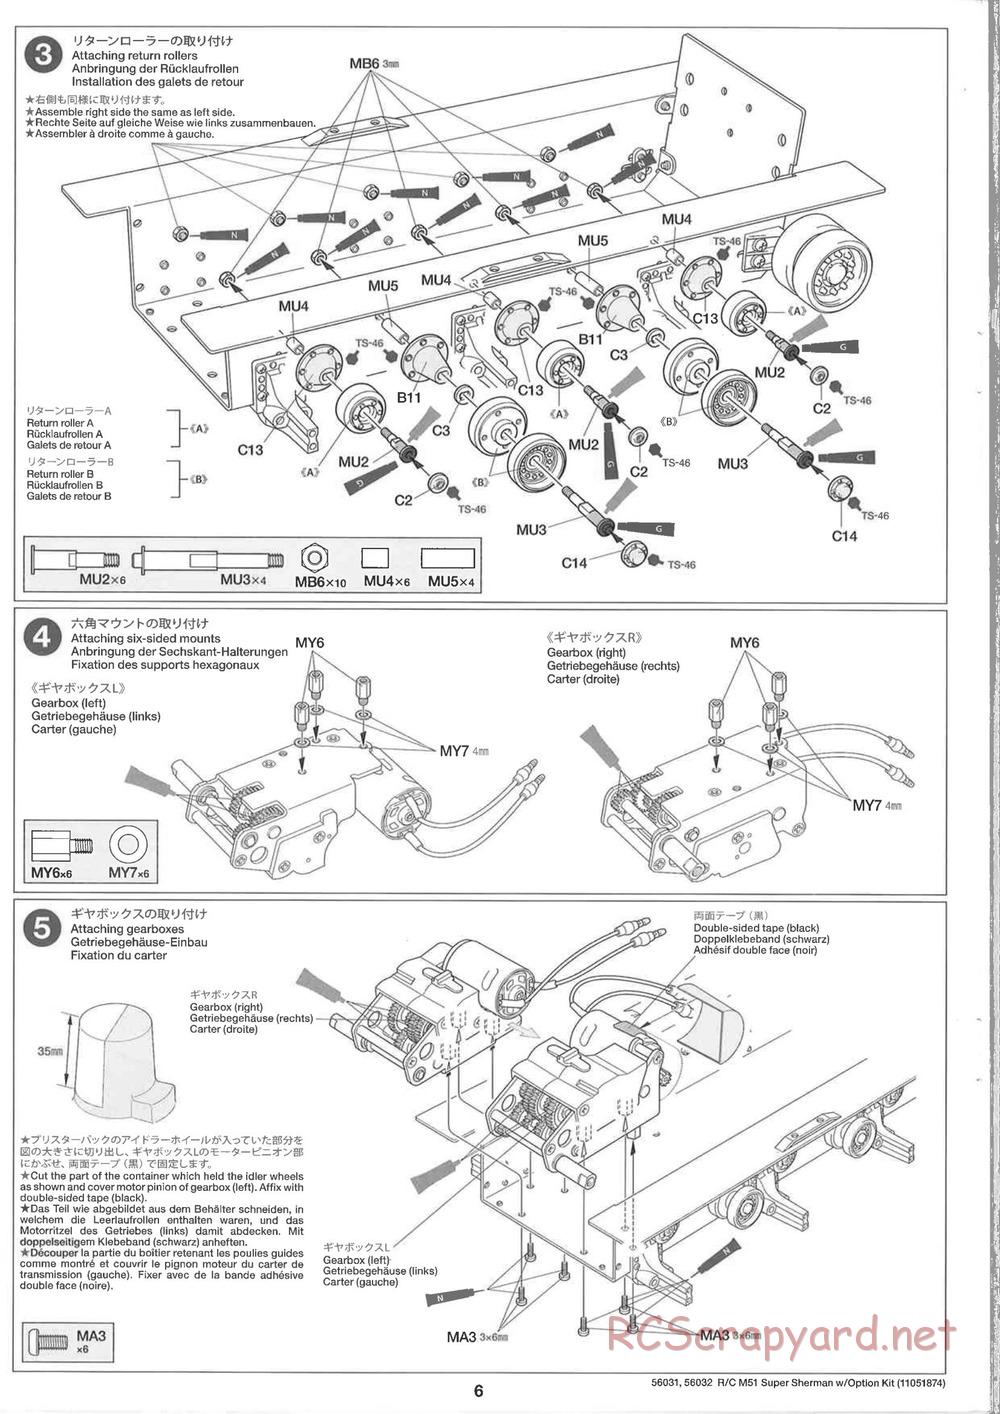 Tamiya - Super Sherman M-51 - 1/16 Scale Chassis - Manual - Page 6